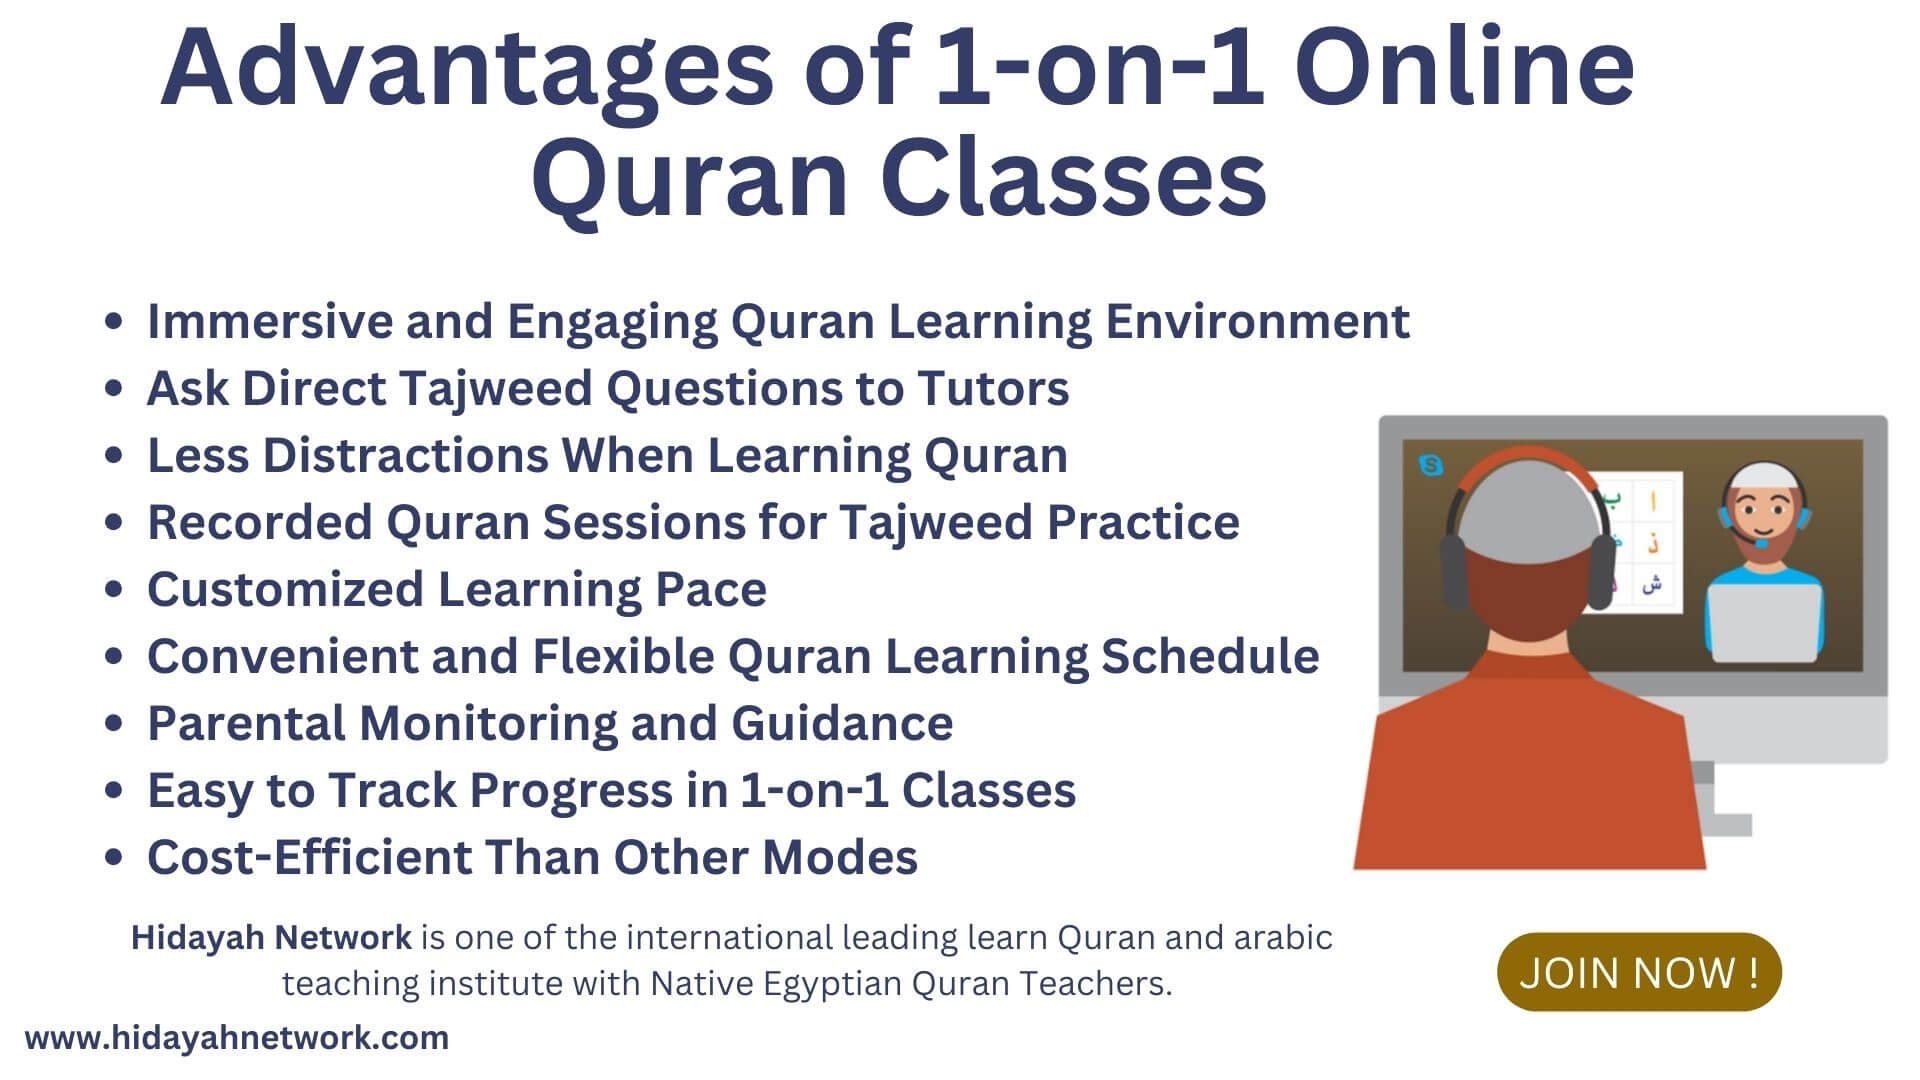 Advantages of 1-on-1 Online Quran Classes